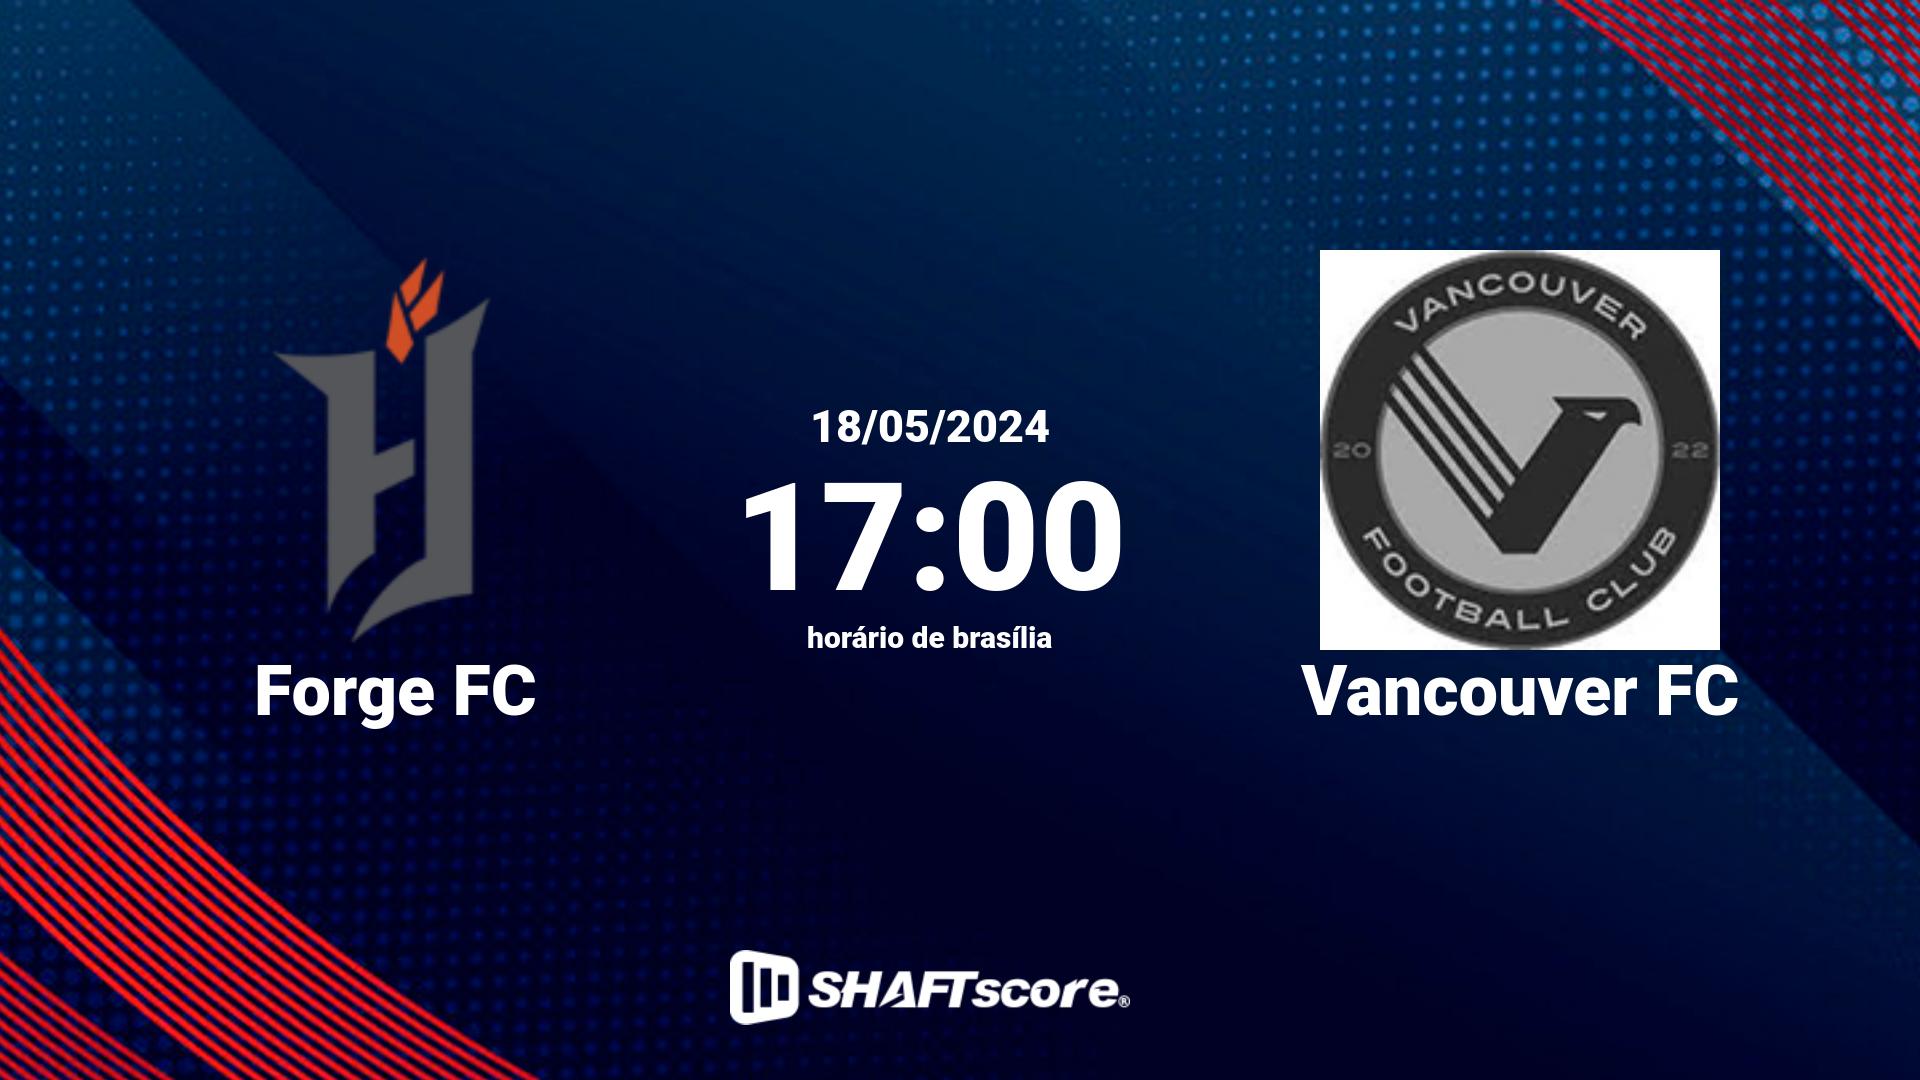 Estatísticas do jogo Forge FC vs Vancouver FC 18.05 17:00